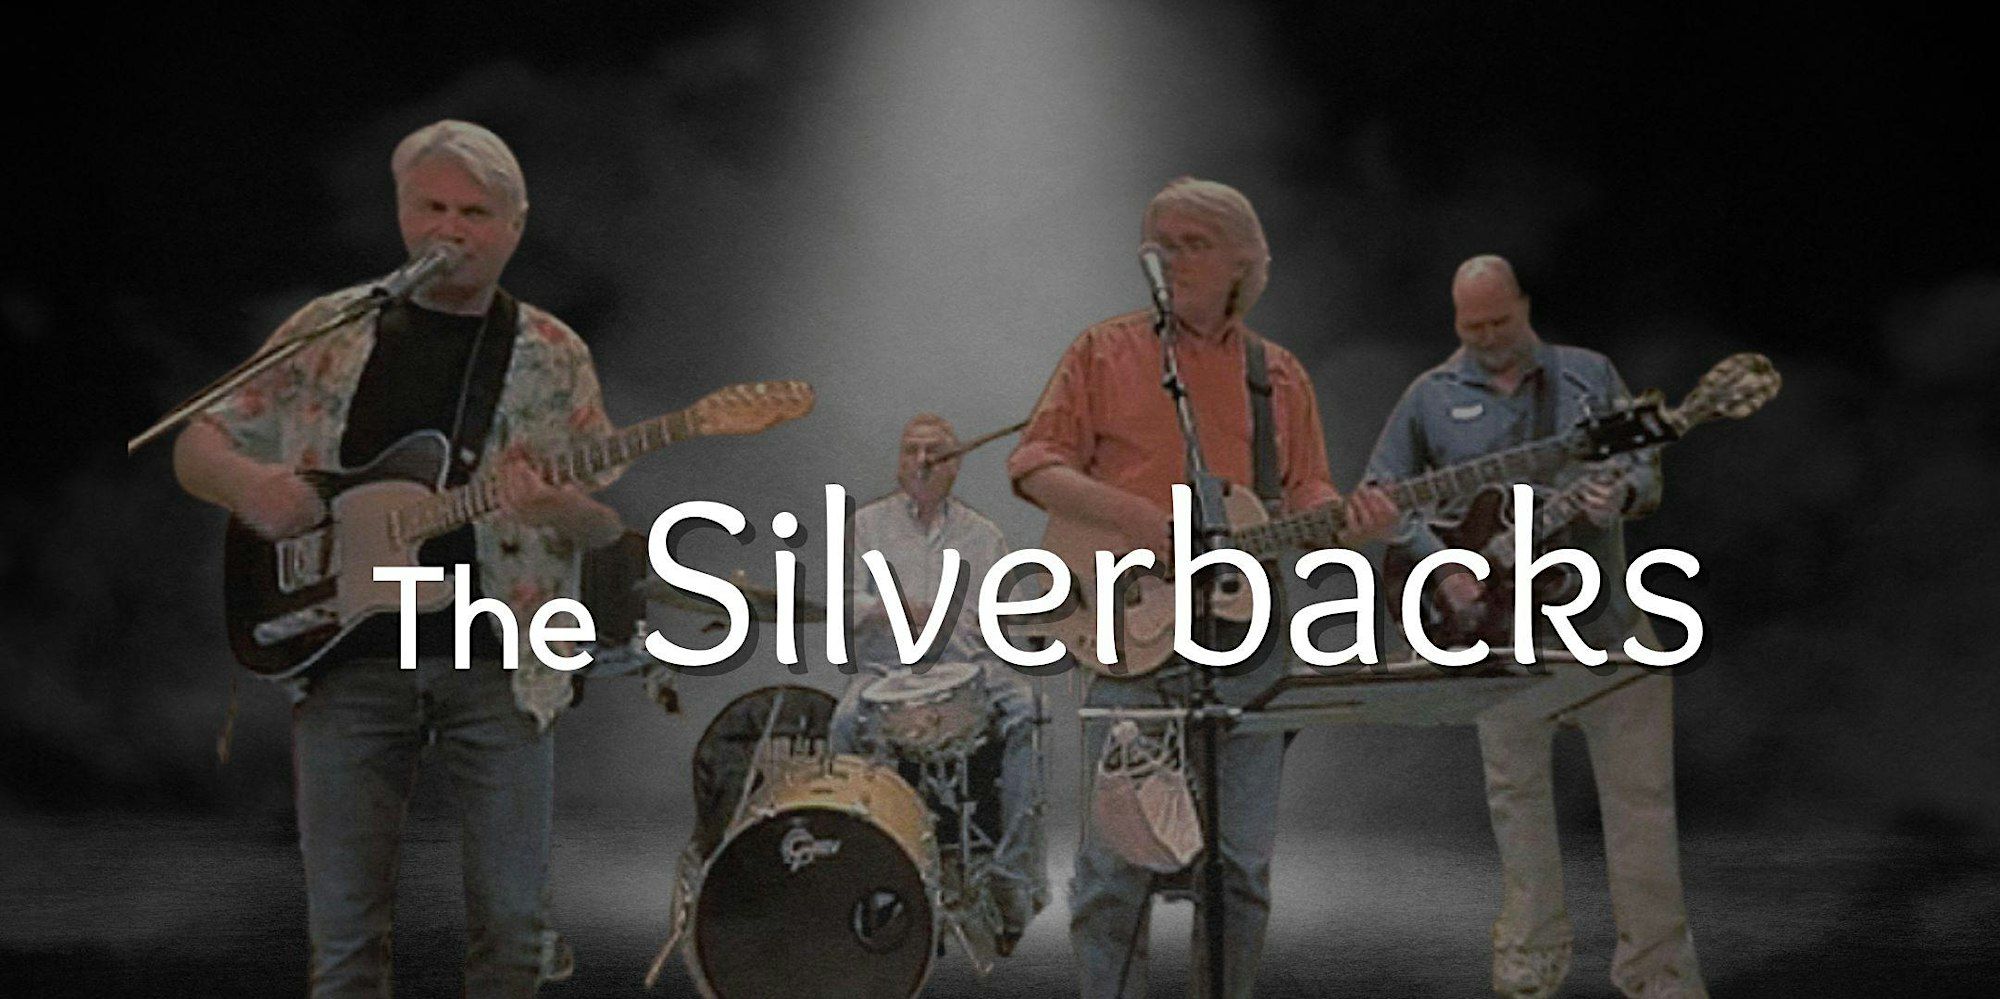 Silverbacks promotional image